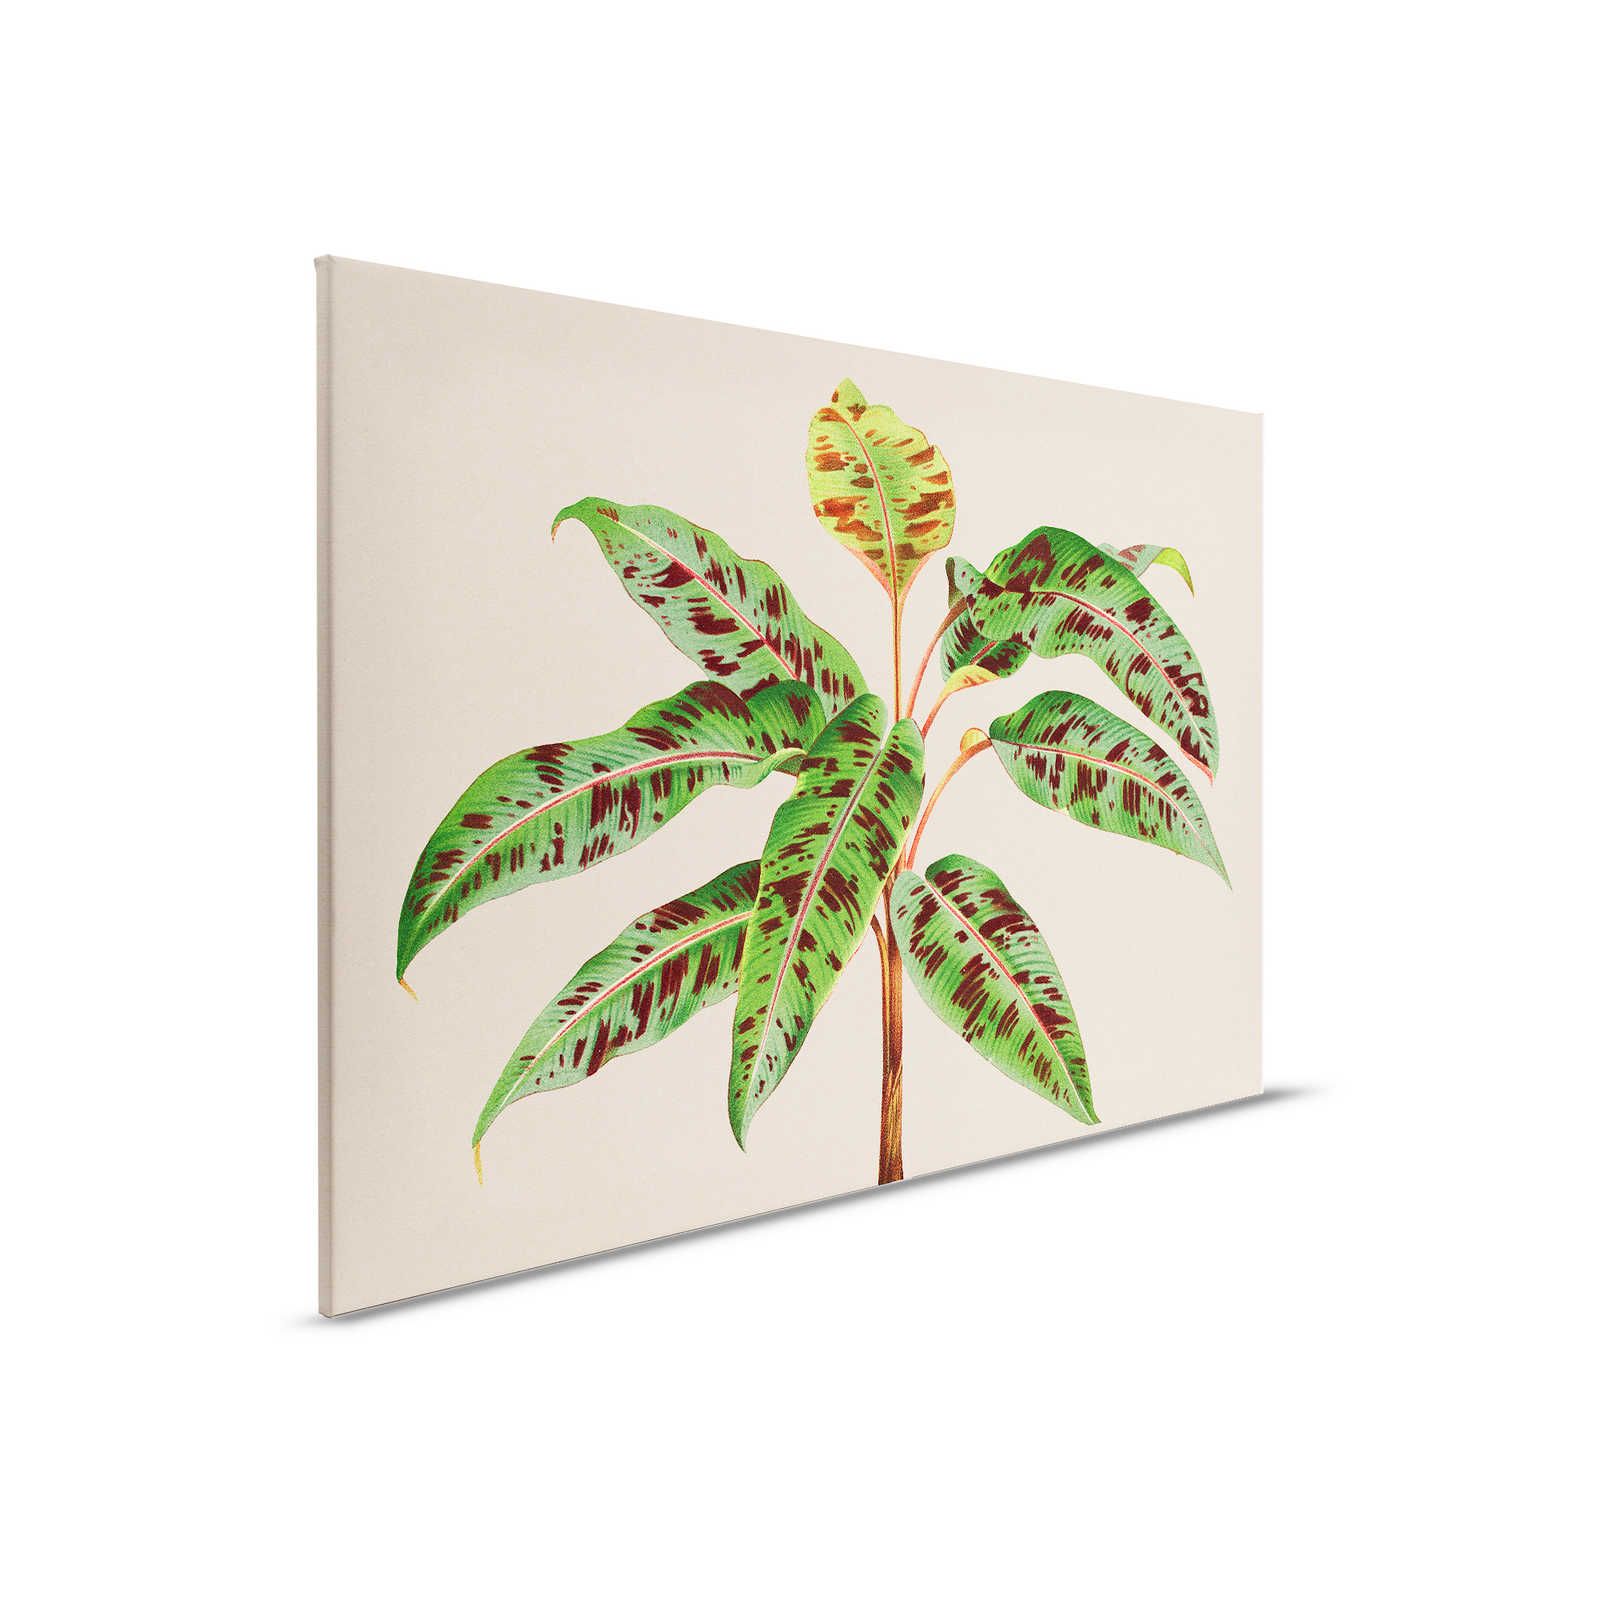 Leaf Garden 4 - Quadro su tela Pianta tropicale Foglie verdi - 0,90 m x 0,60 m
